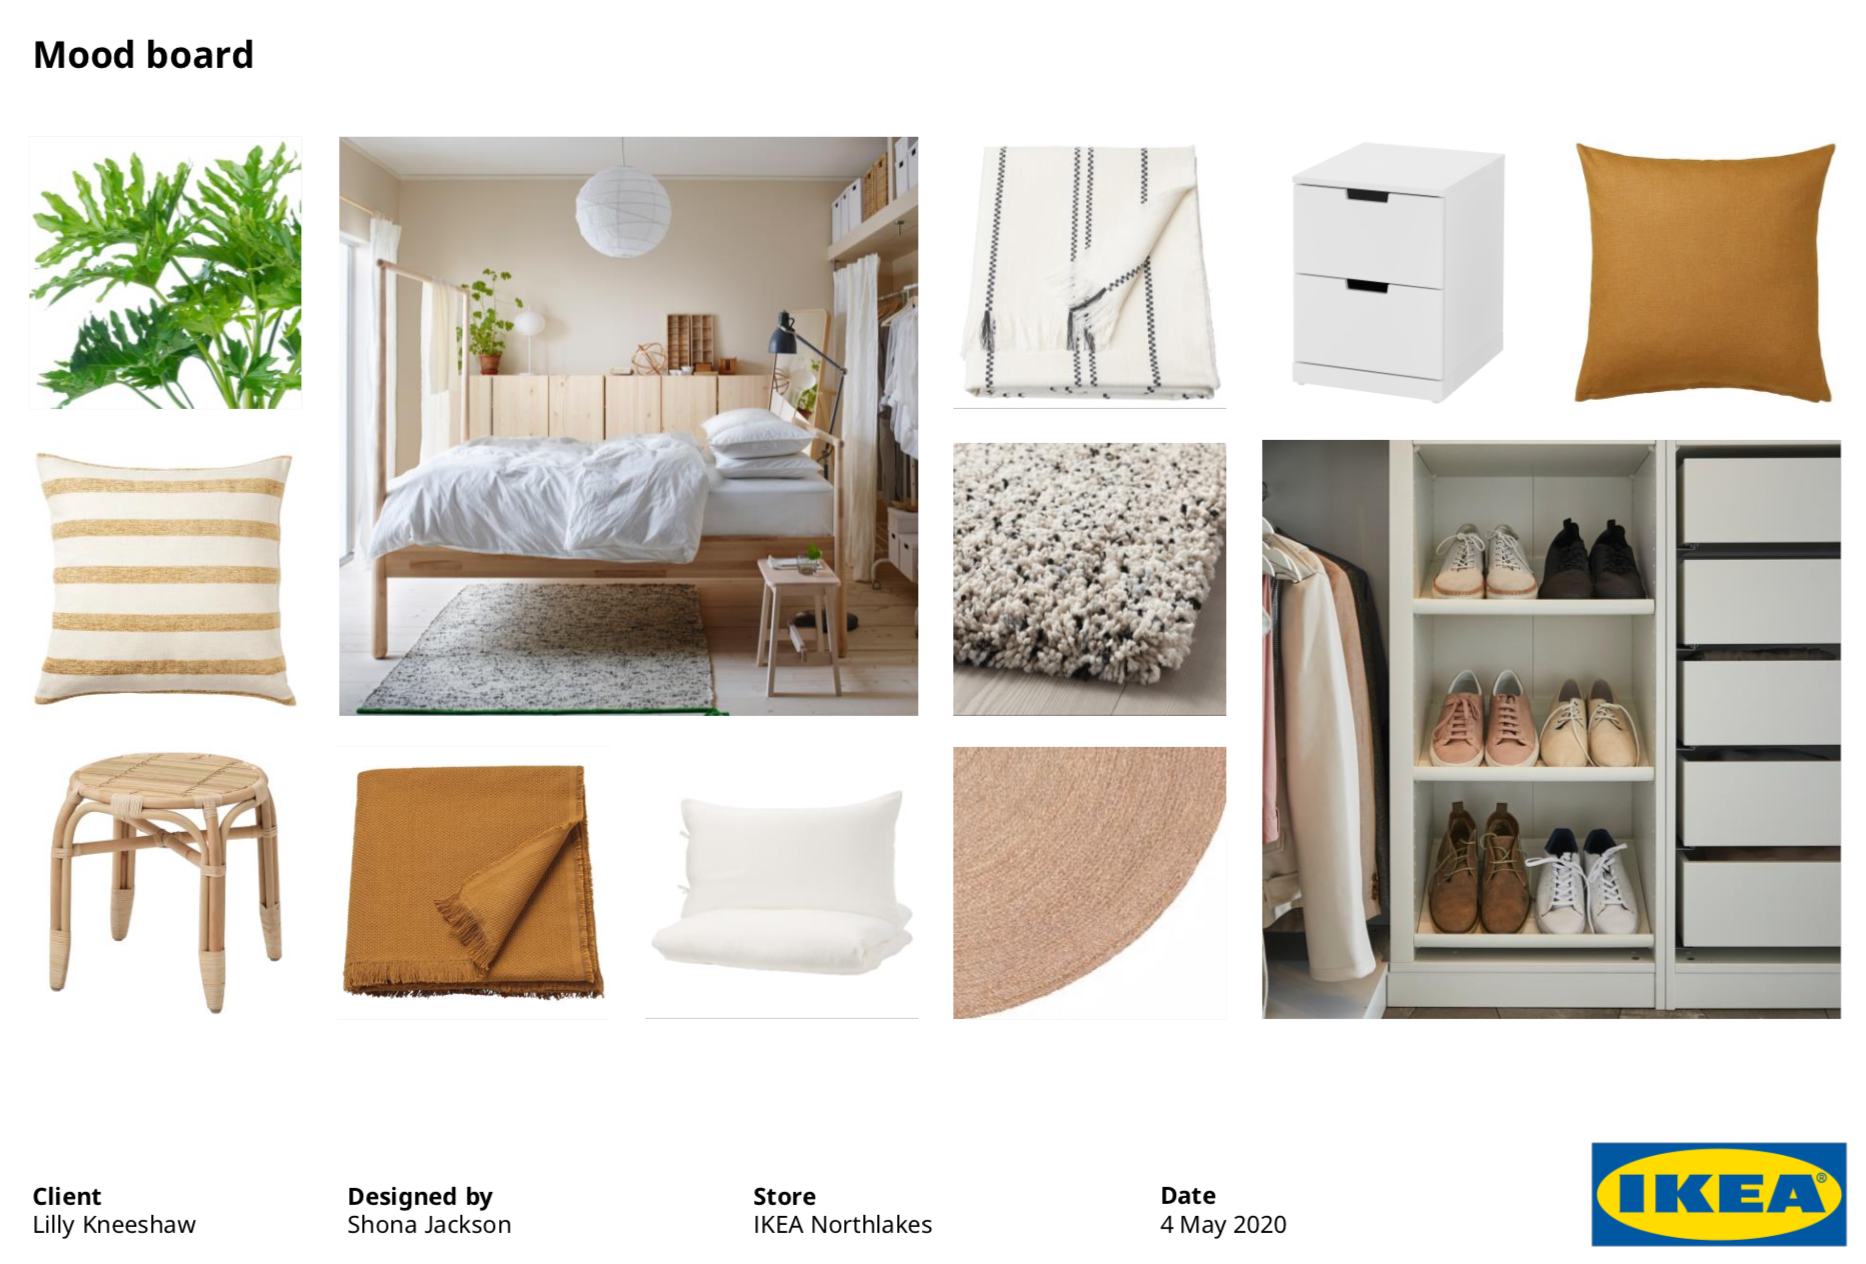 IKEA launches first virtual interior design service - The